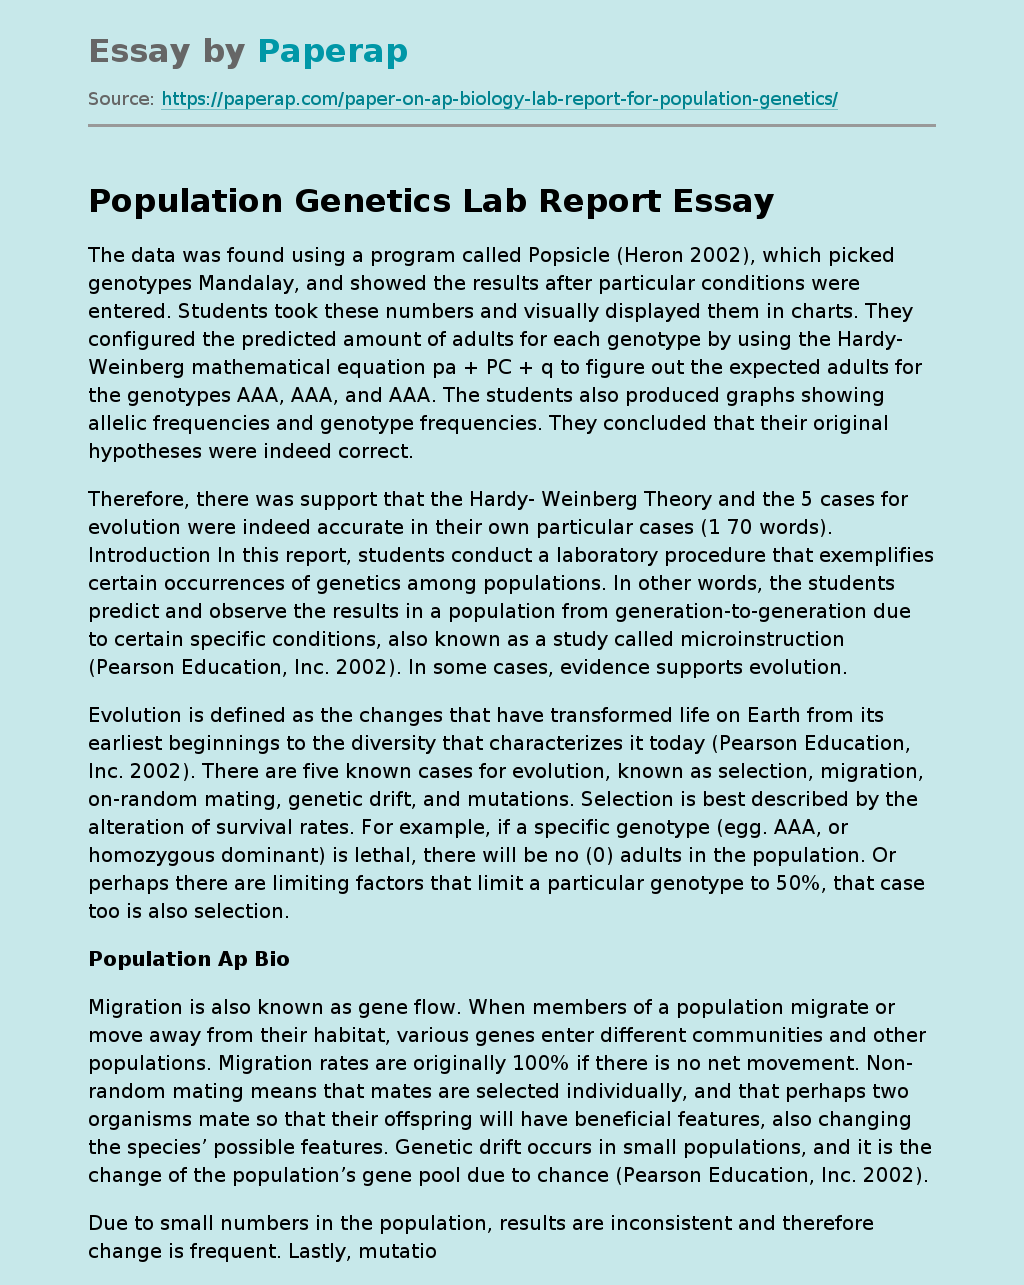 Population Genetics Lab Report